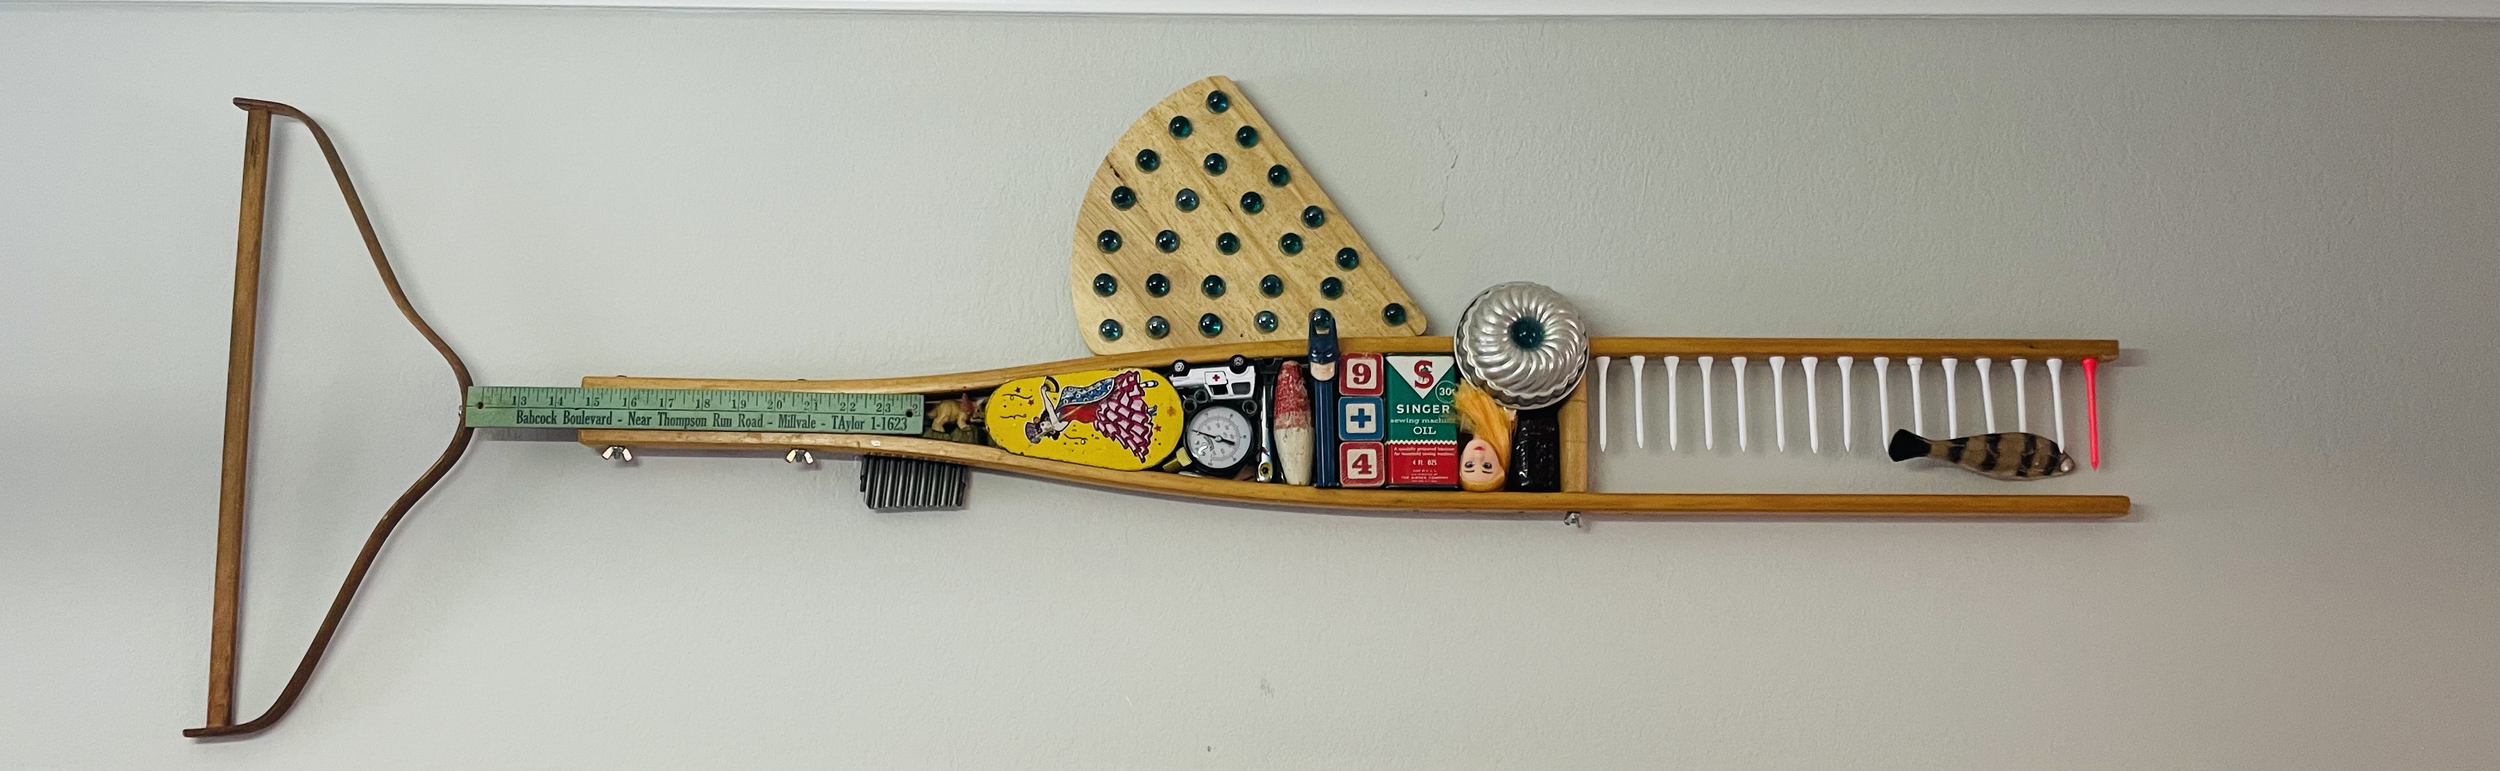 Pin by Andee Schuck on make fun of drake board.